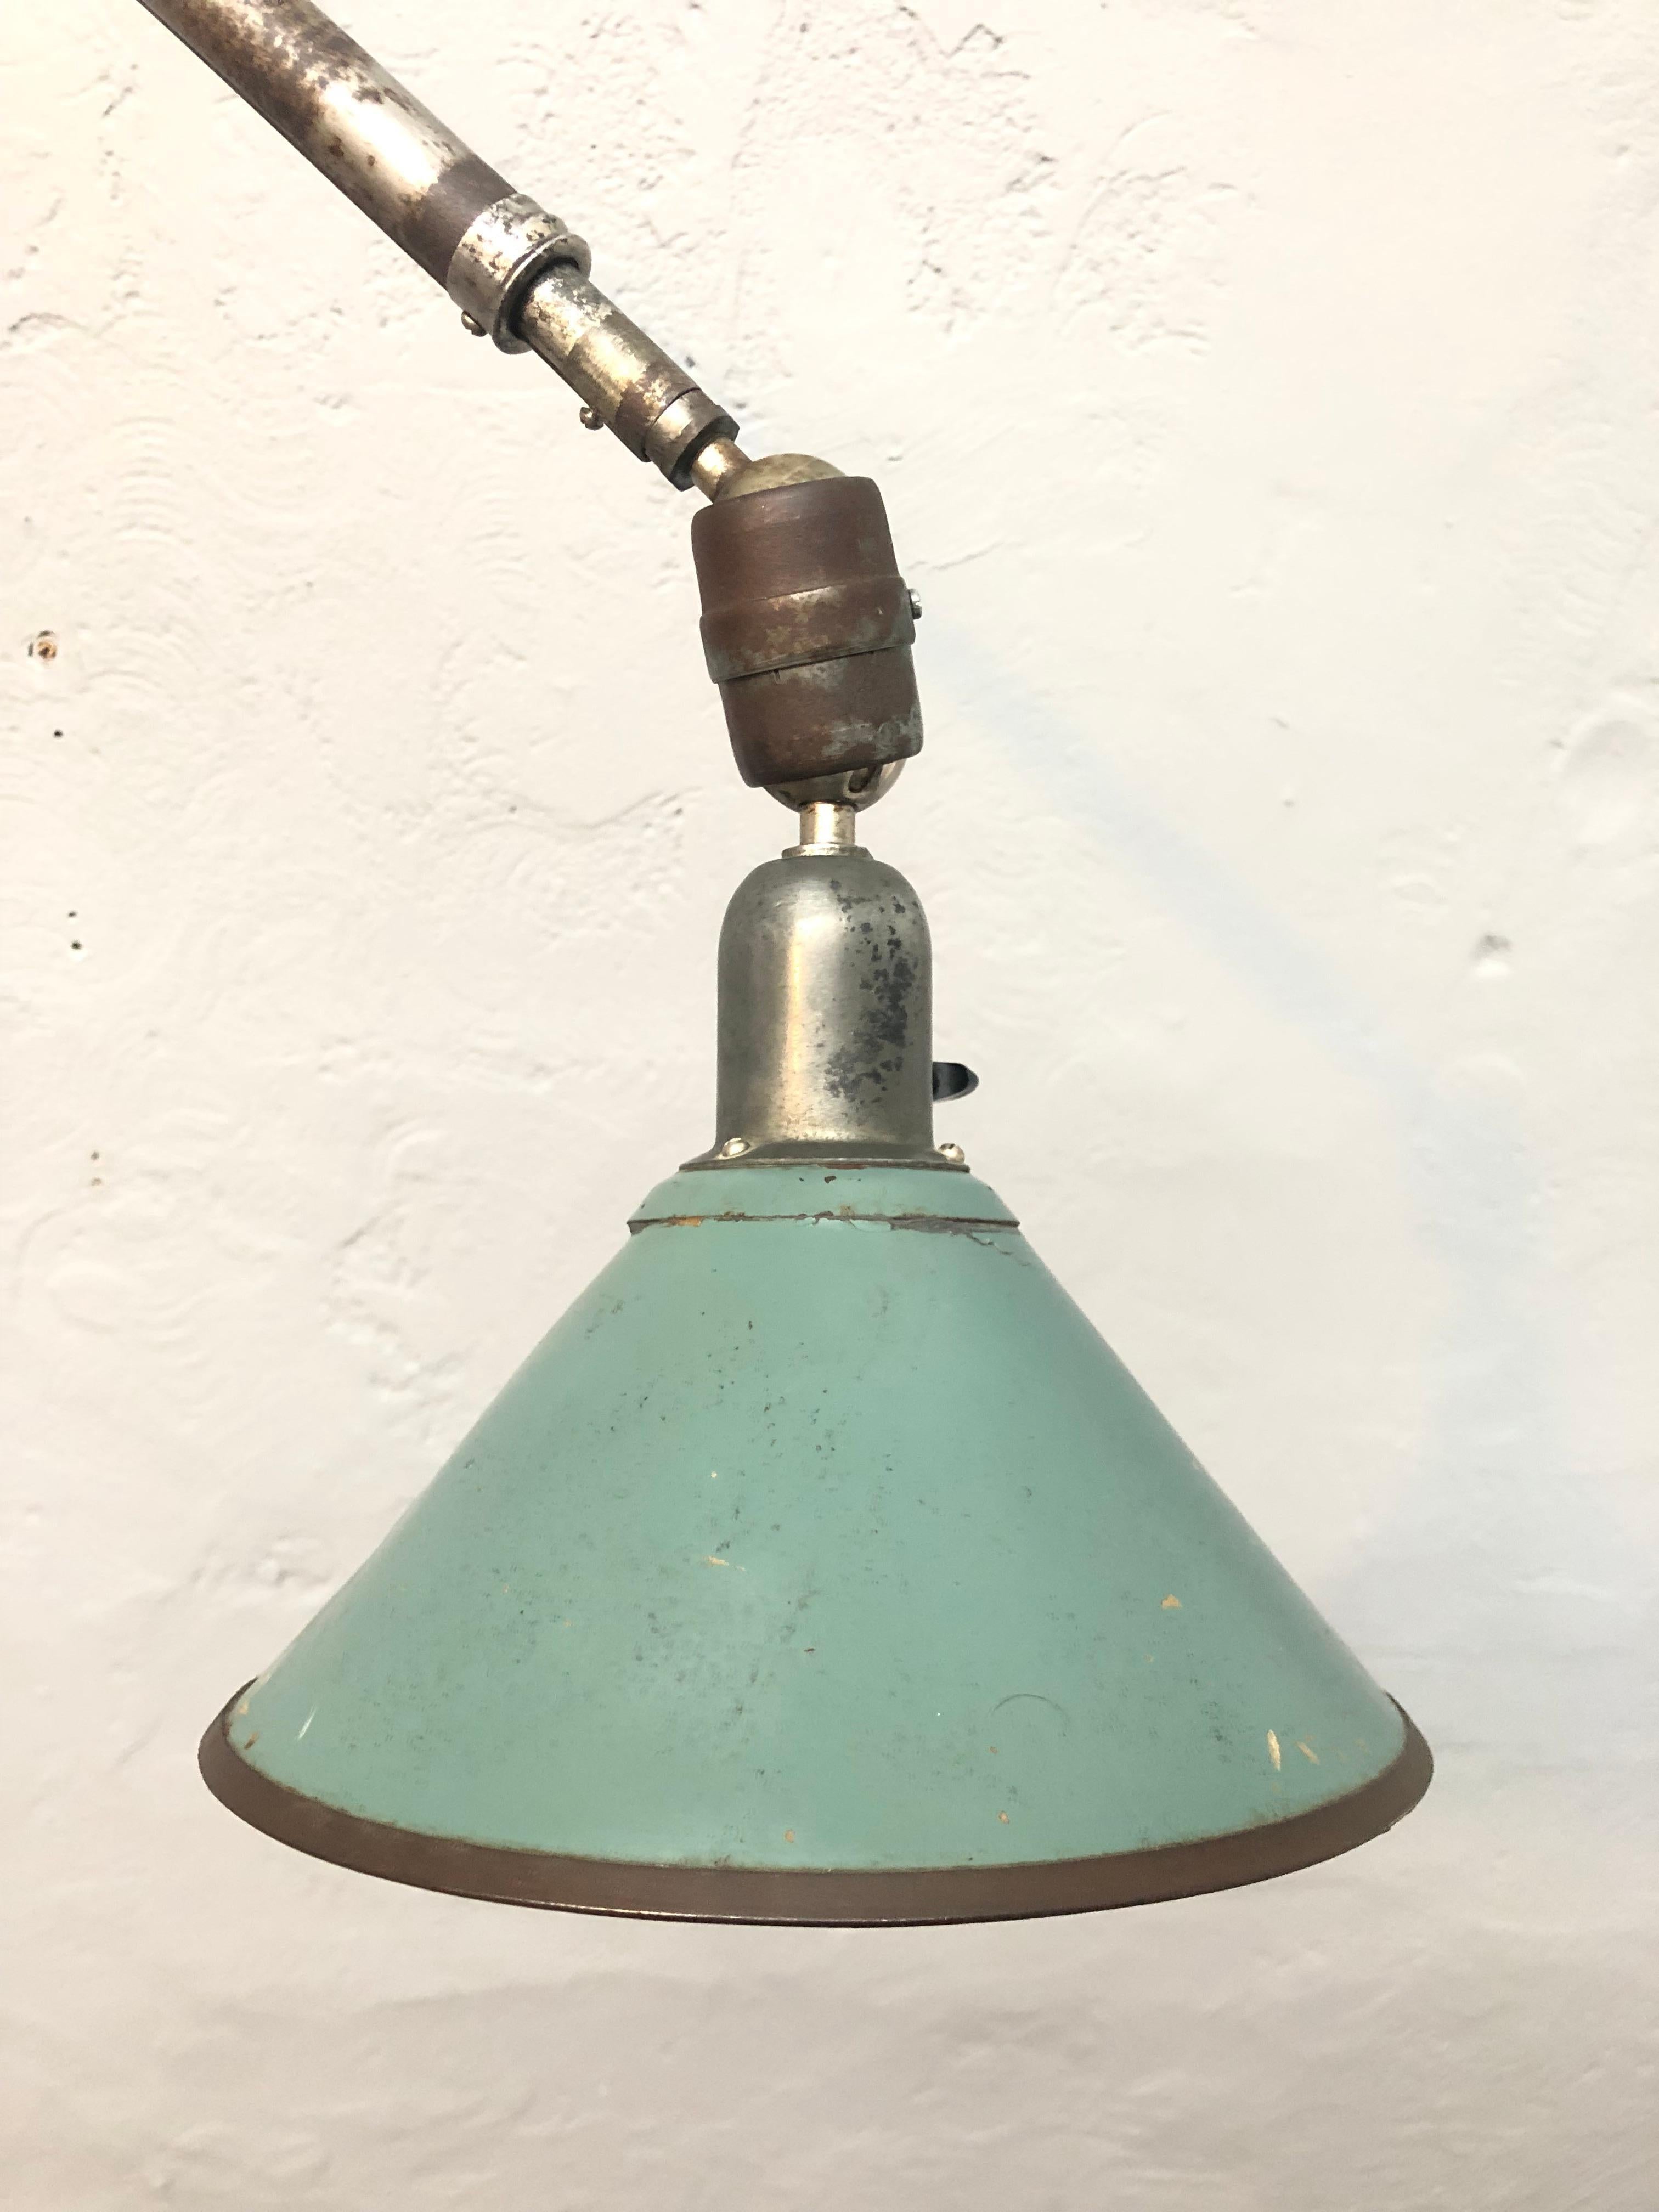 Industriel Rare Series 1 Antique Triplex Industrial Lamp by Johan Petter Johansson for ASEA en vente